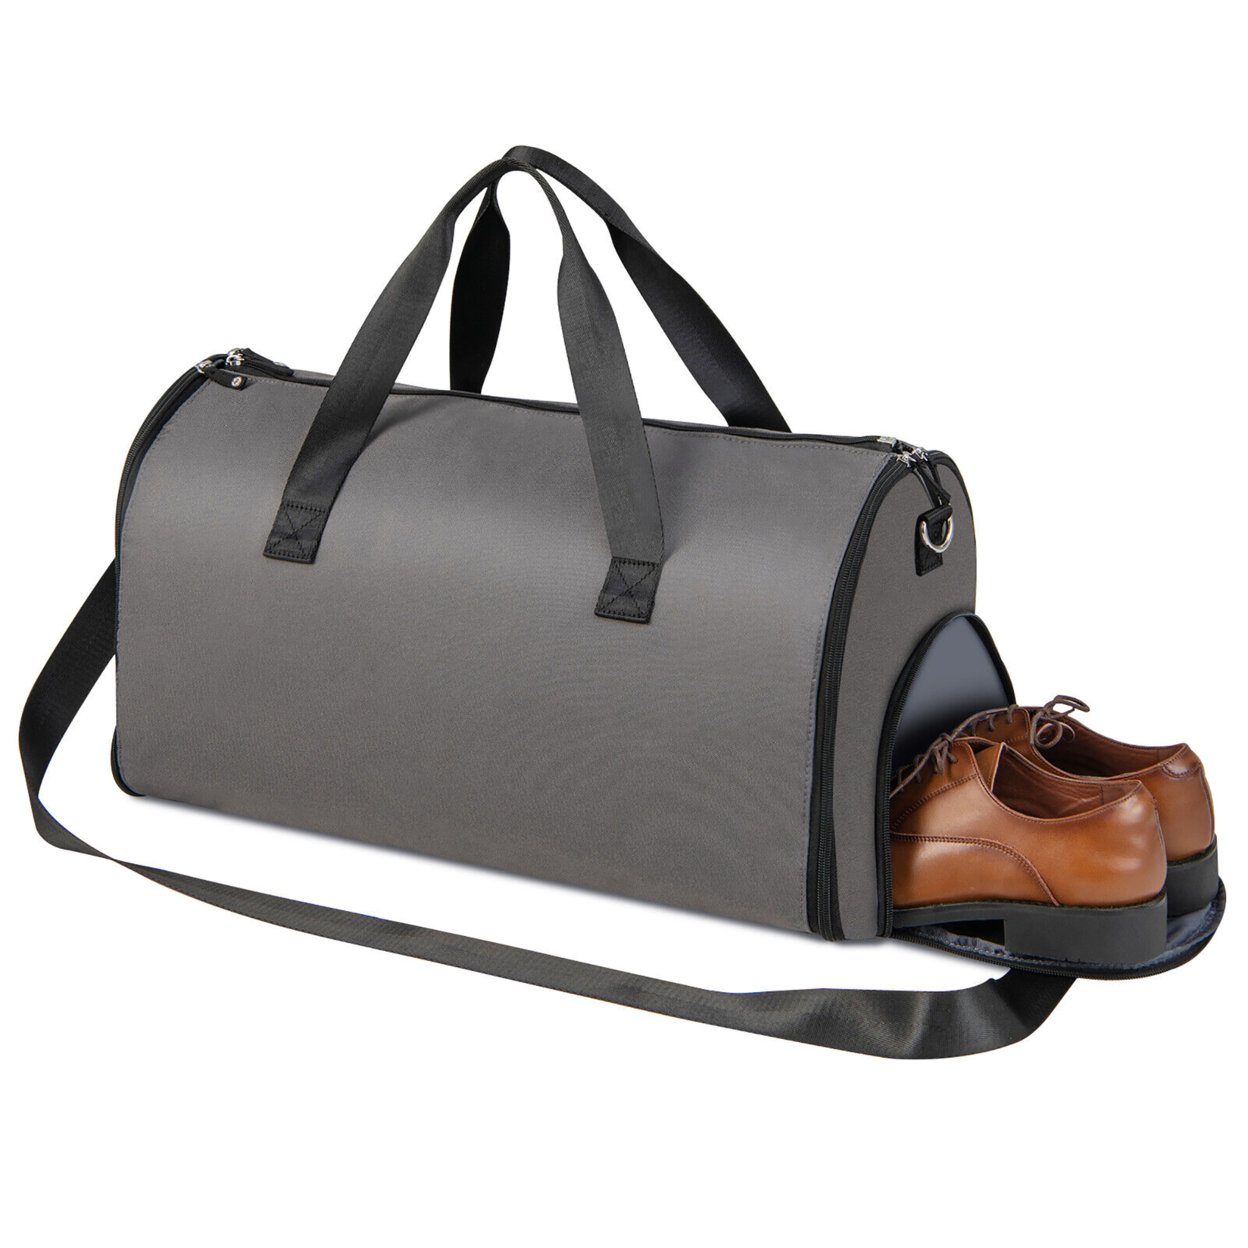 2 In 1 Duffel Garment Bag Hanging Suit Travel Bag W/ Shoe Compartment & Strap Light - Light Grey